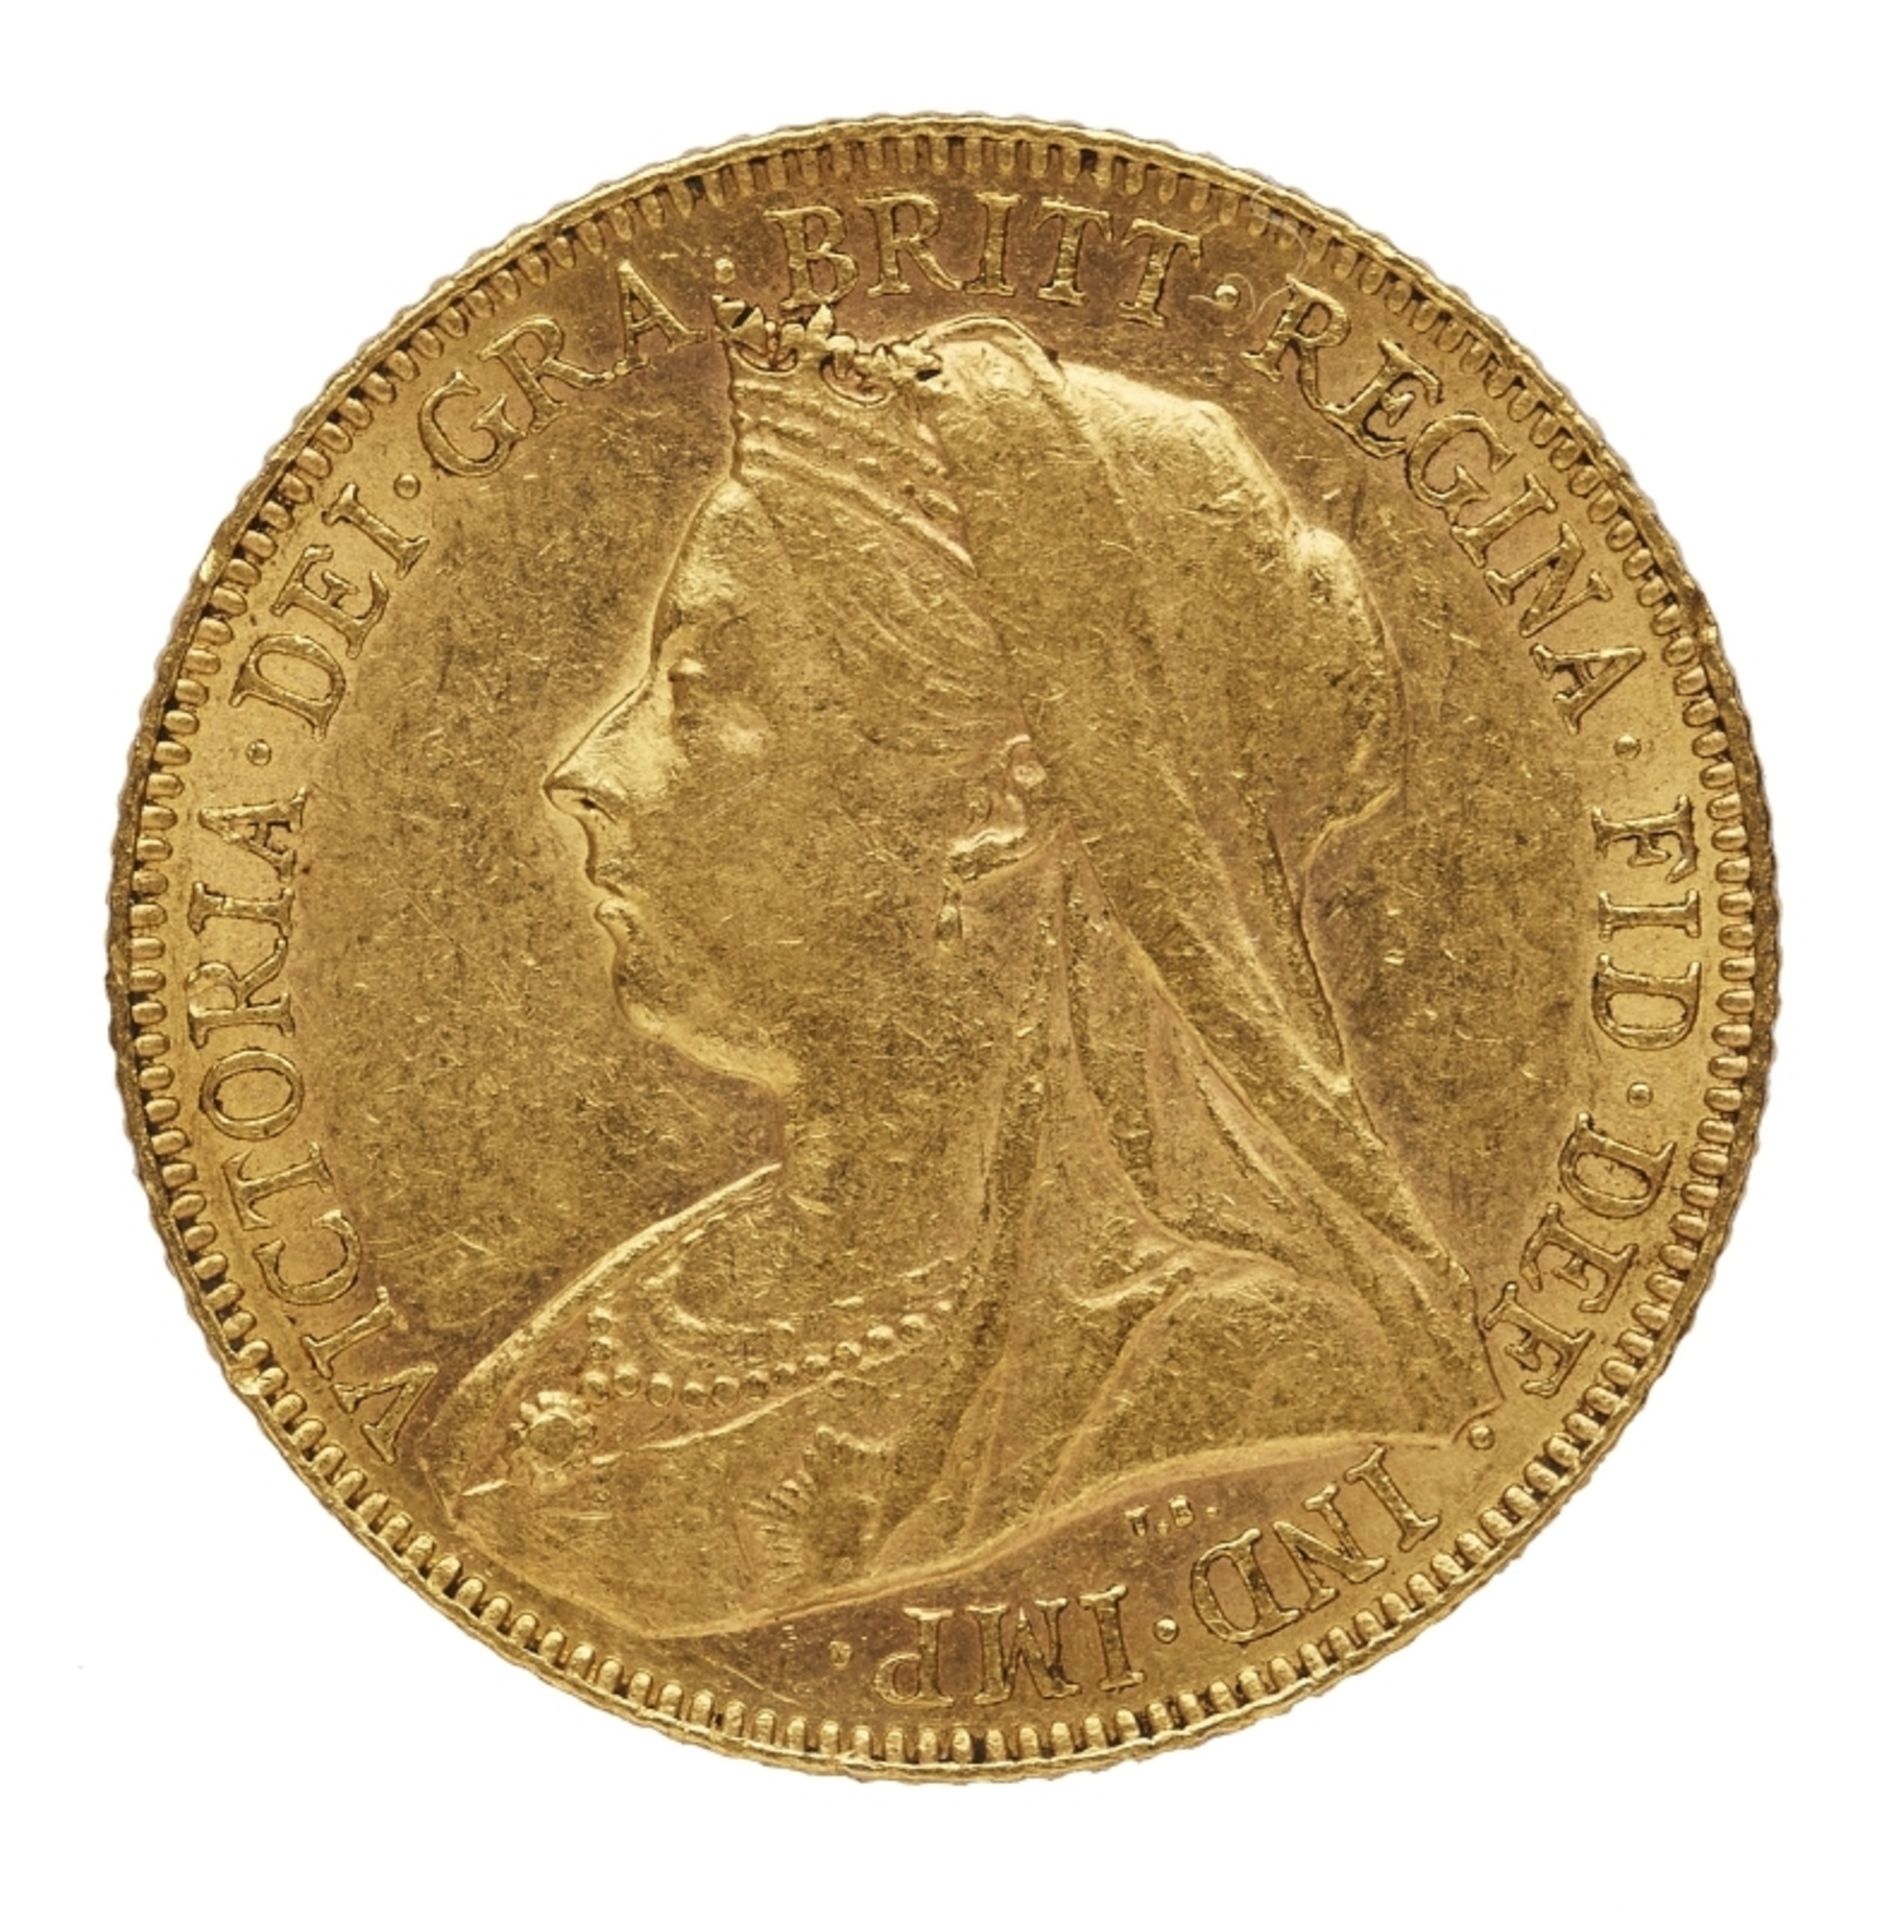 Goldmünze Sovereign, Queen Victoria, England 1900